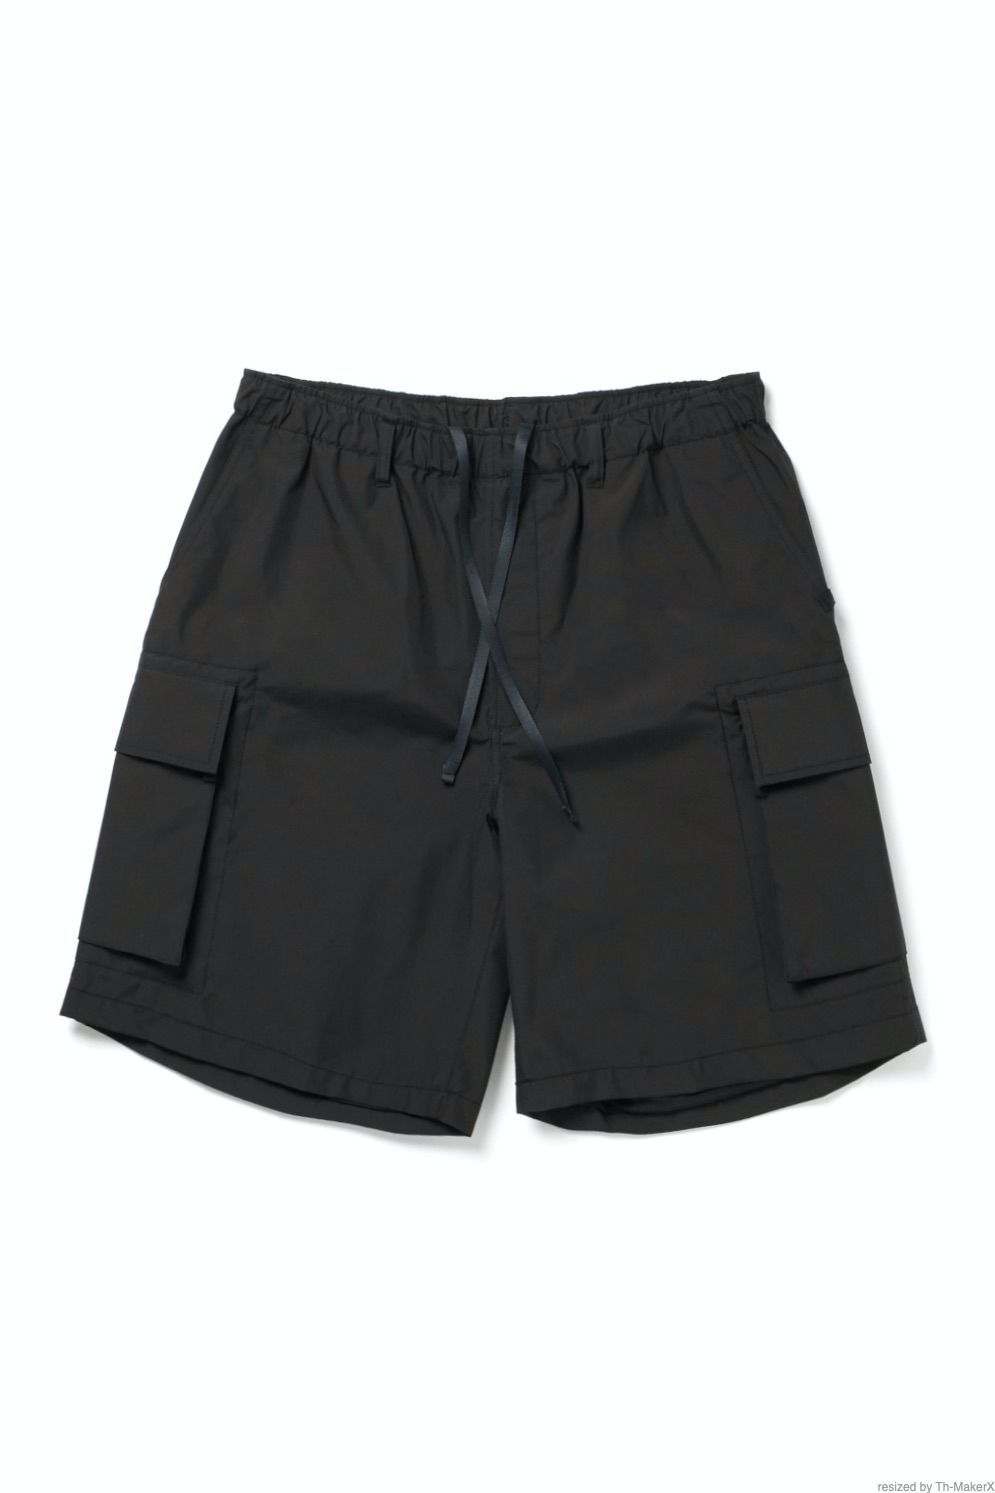 DAIWA PIER39 - gore tex infinium tech field 6pocket shorts -black- 22ss  4月23日発売 ！ | asterisk